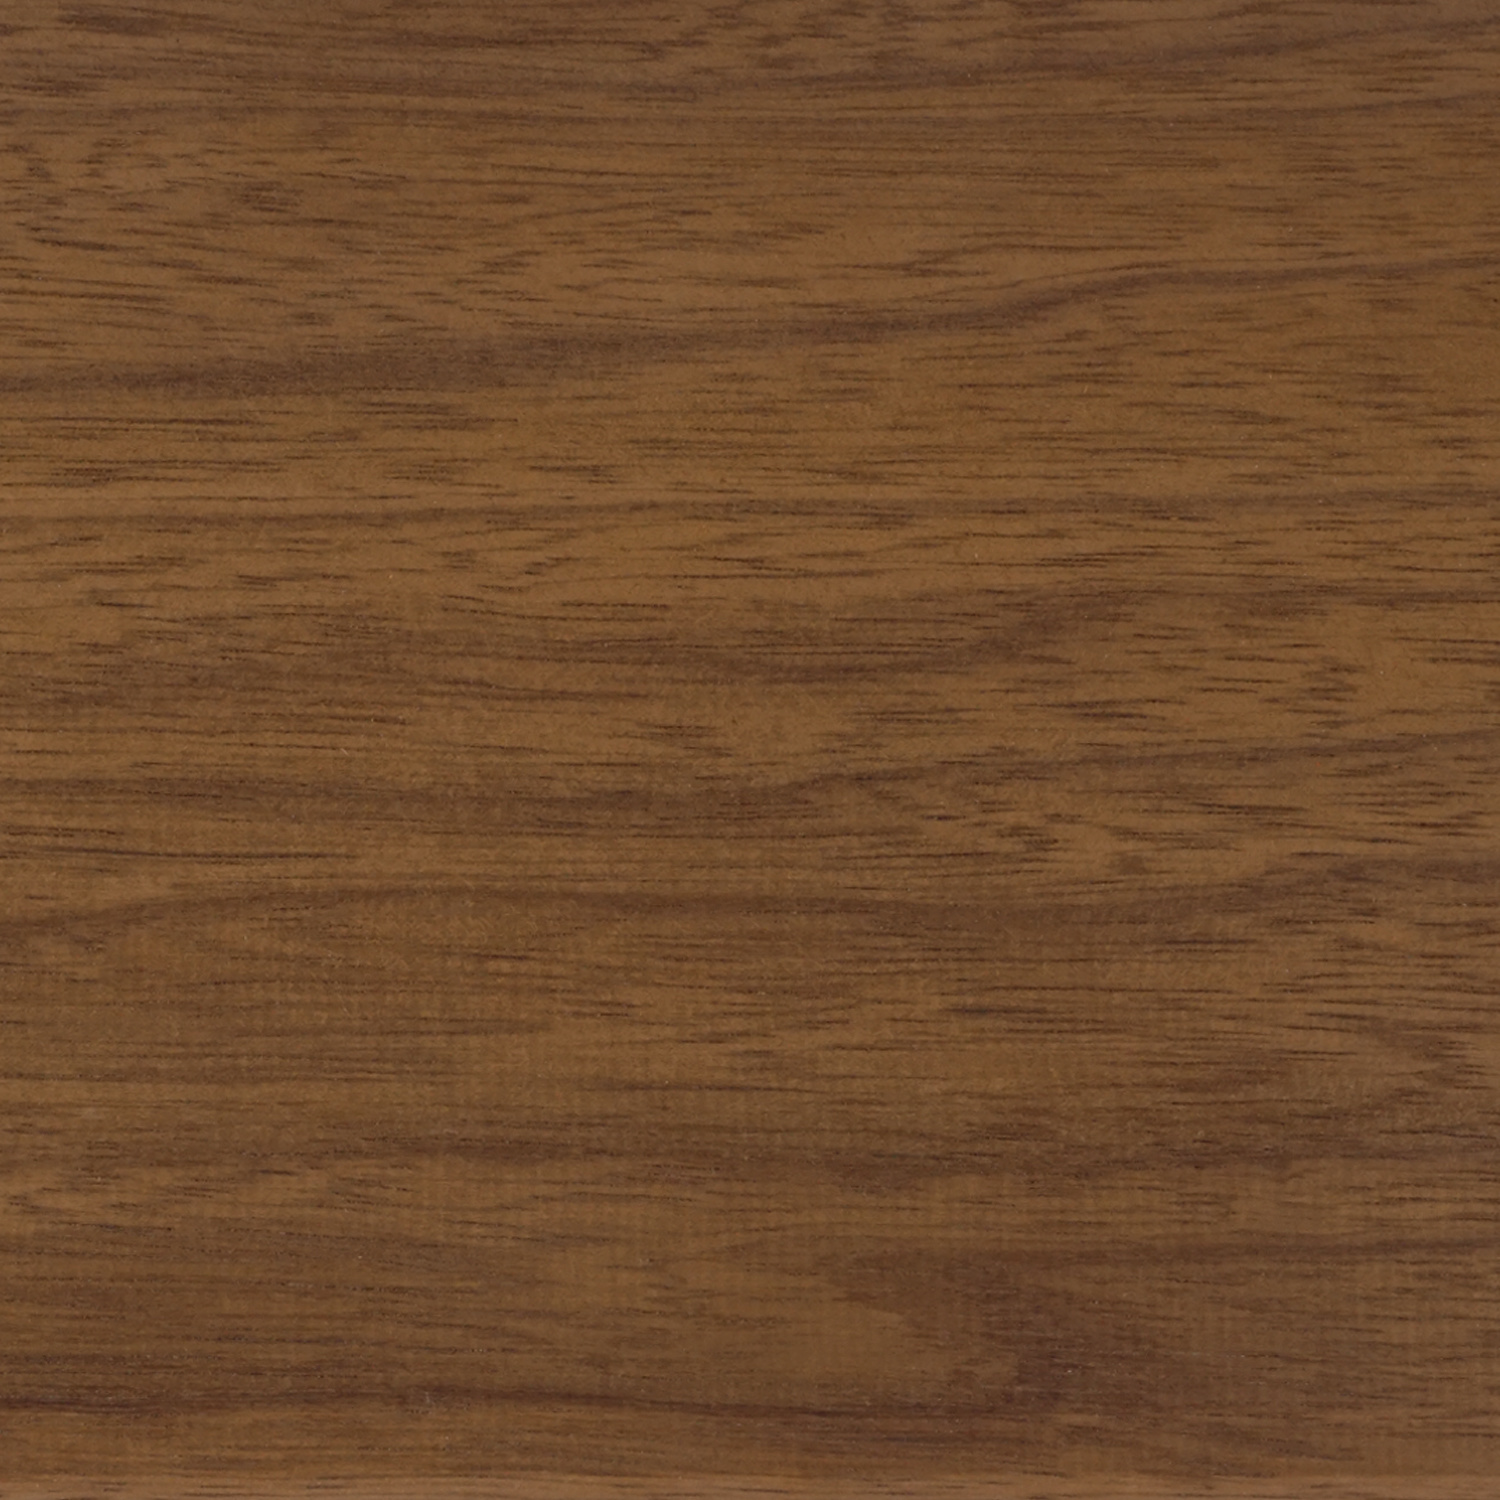  Thermowood Fraké plank 21x90mm - geschaafd - kunstmatig gedroogd (kd 8-12%) - thermisch gemodificeerd Fraké hout (thermohout)